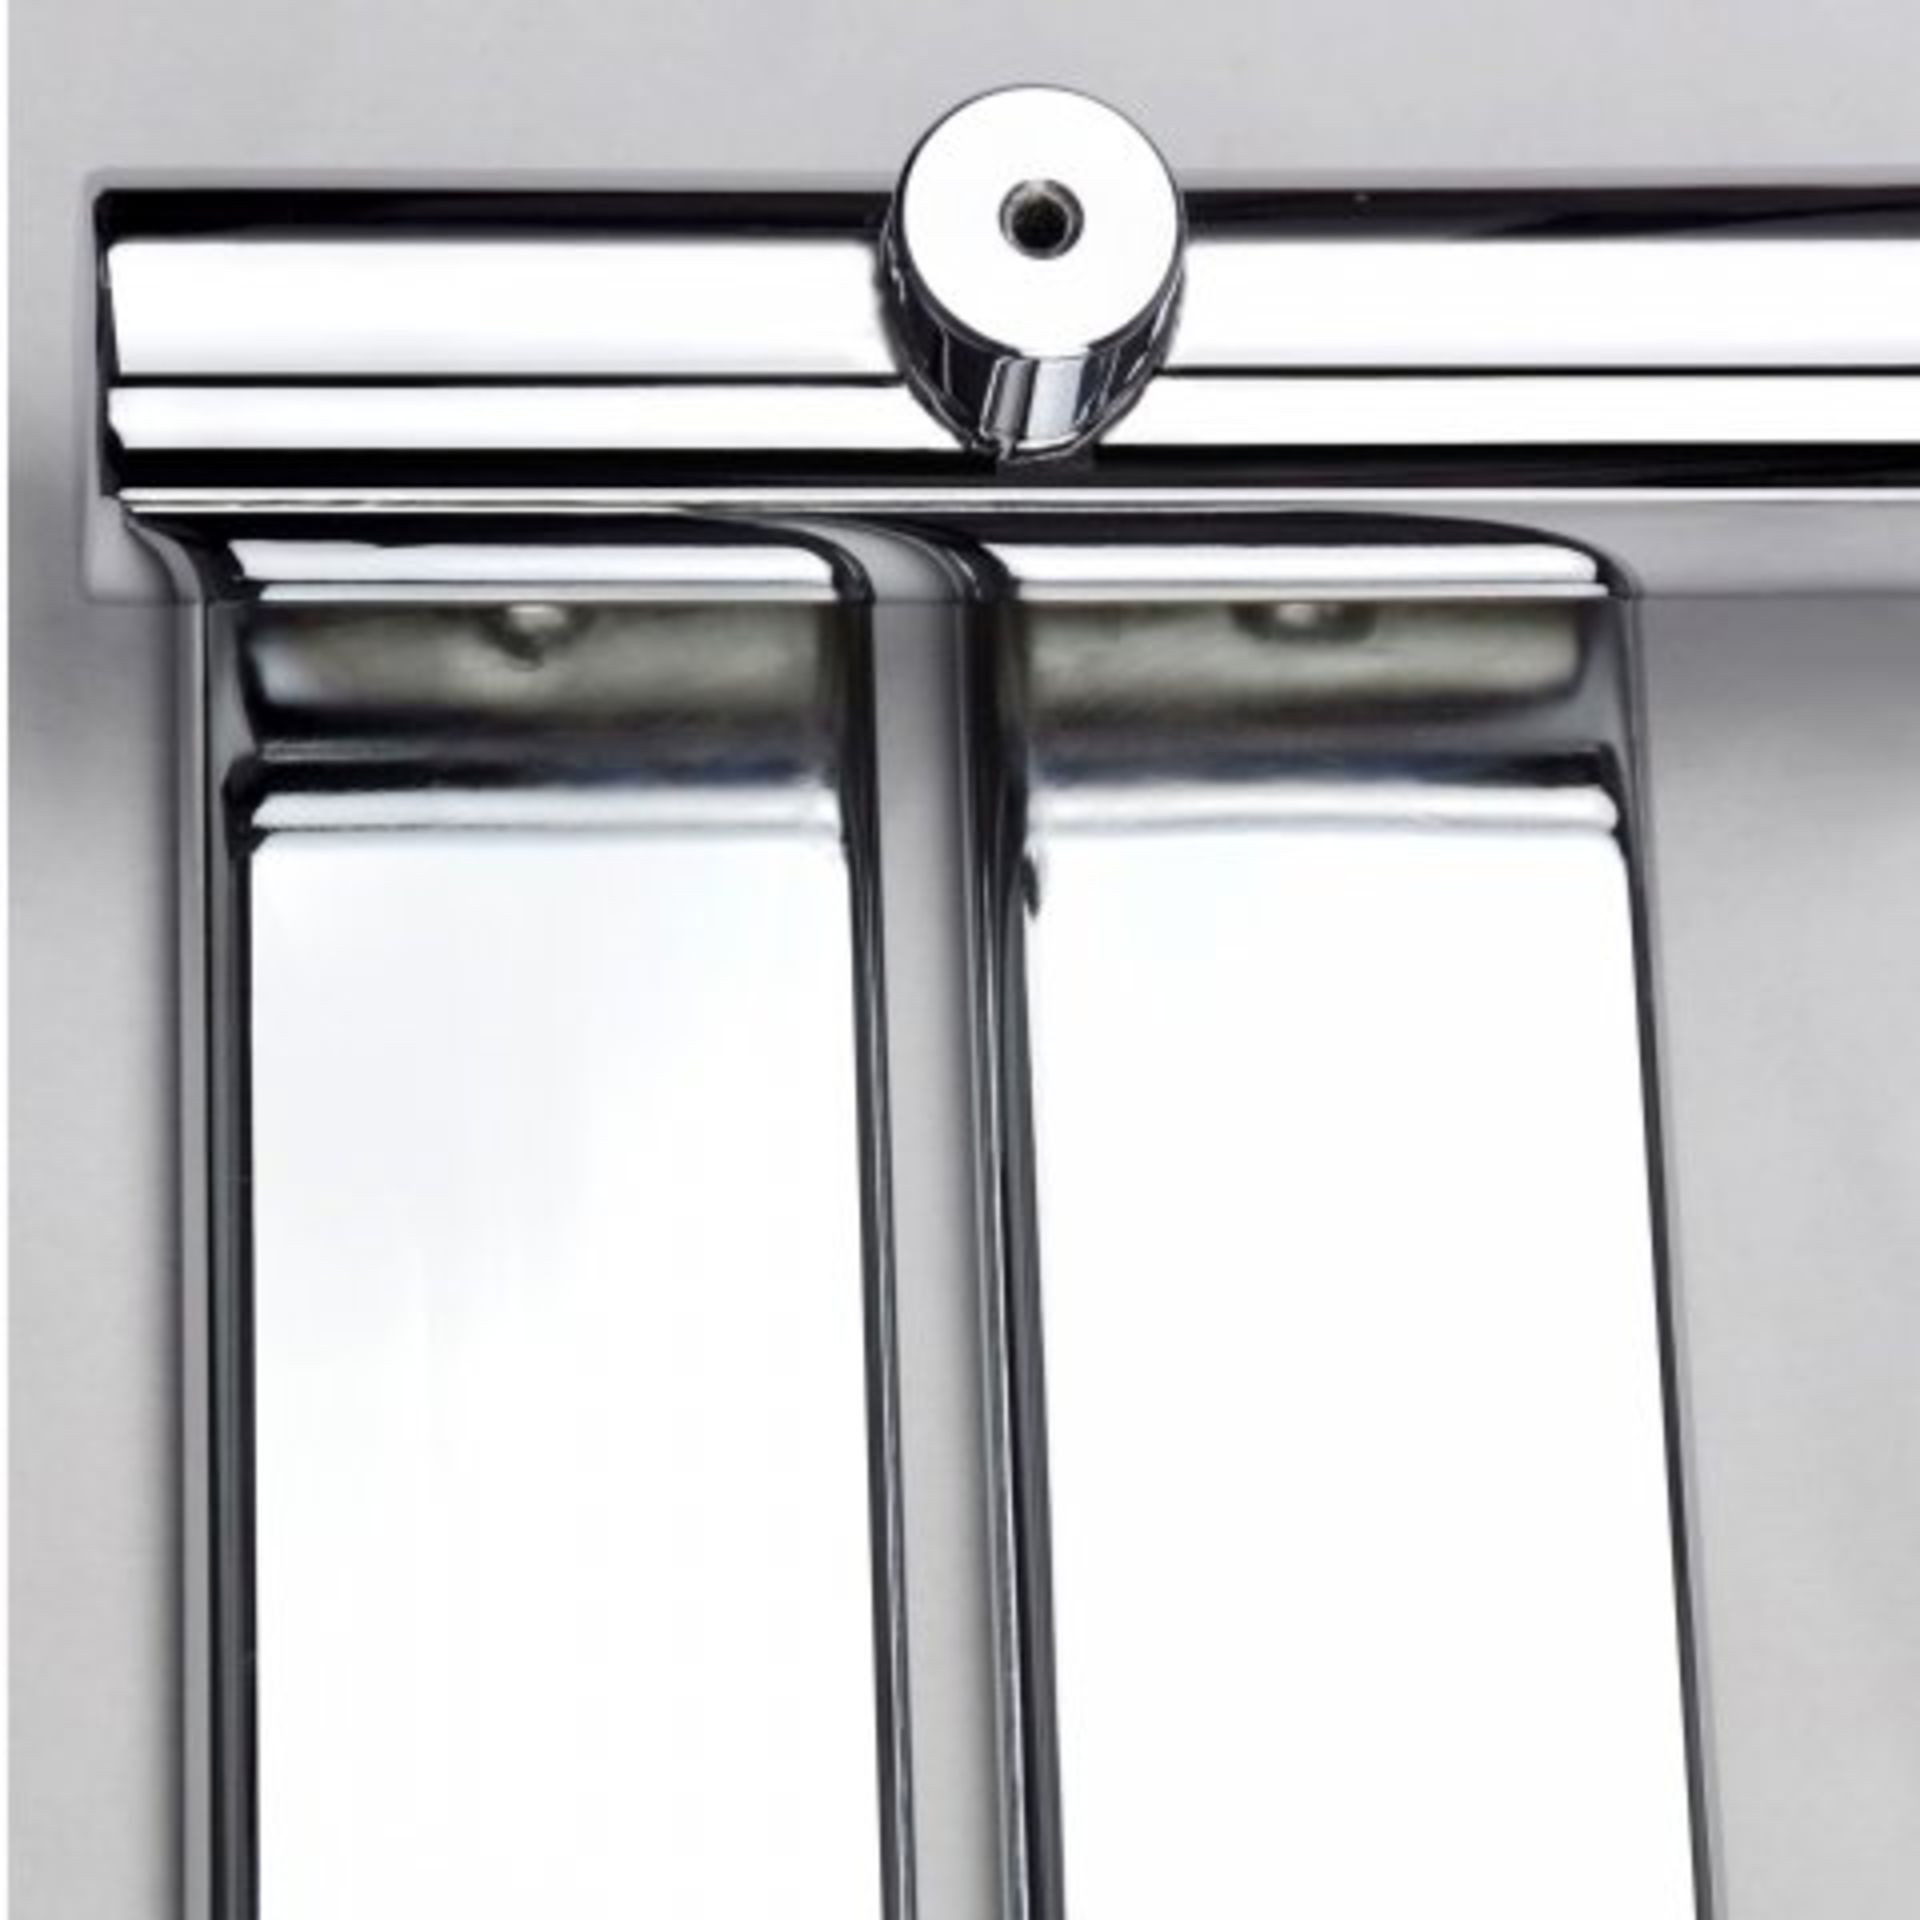 (SKU378) 1600x450mm Chrome Flat Panel Ladder Towel Radiator - Francis Range. RRP £436.99. - Image 5 of 5